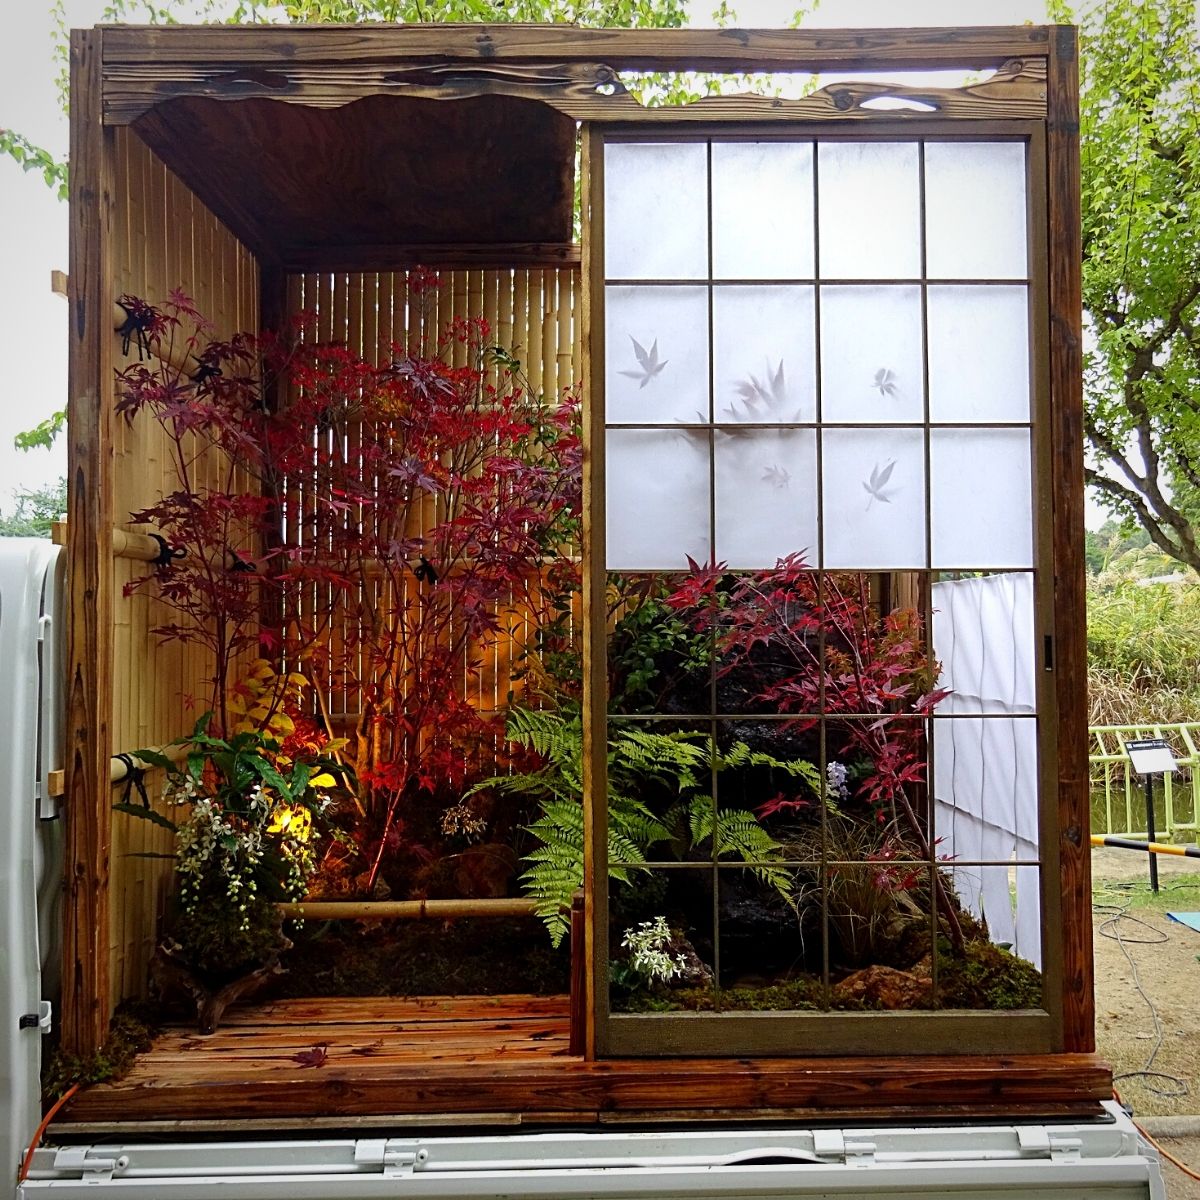 Kei-tora or Kei trucks create a fascinating world of gardening